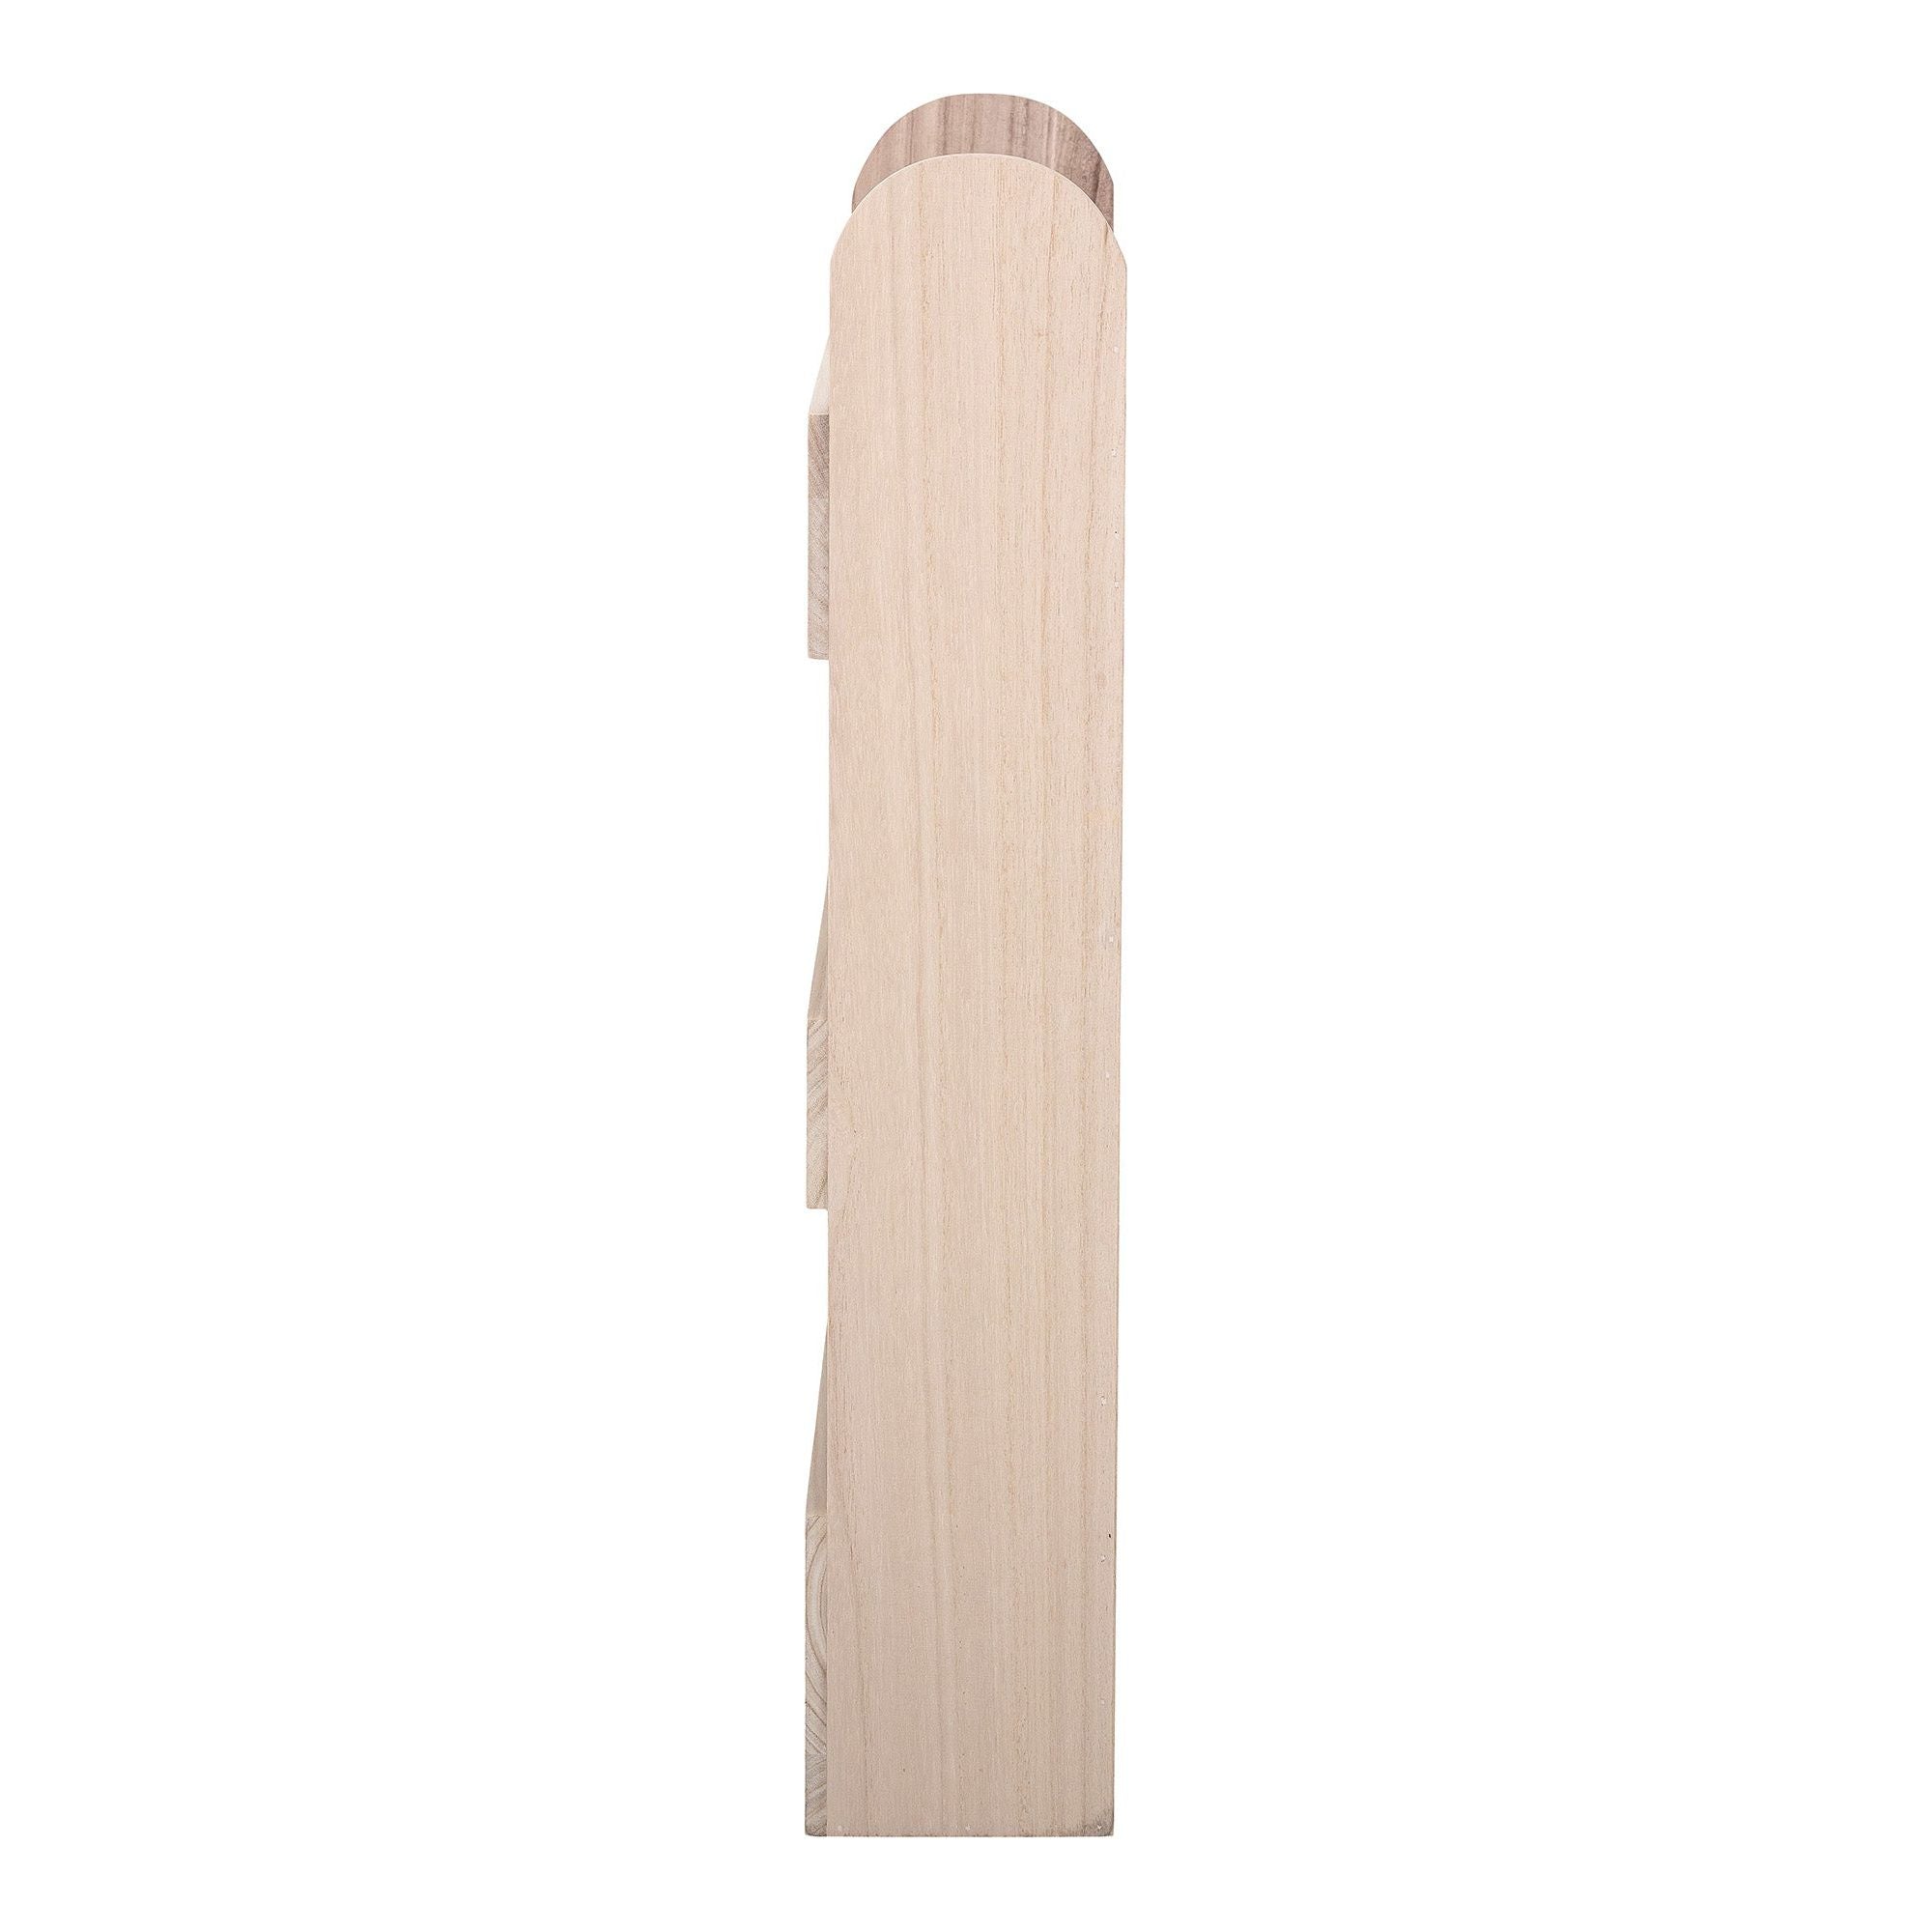 "MORIS" lentyna, natūrali spalva, paulovnijos mediena